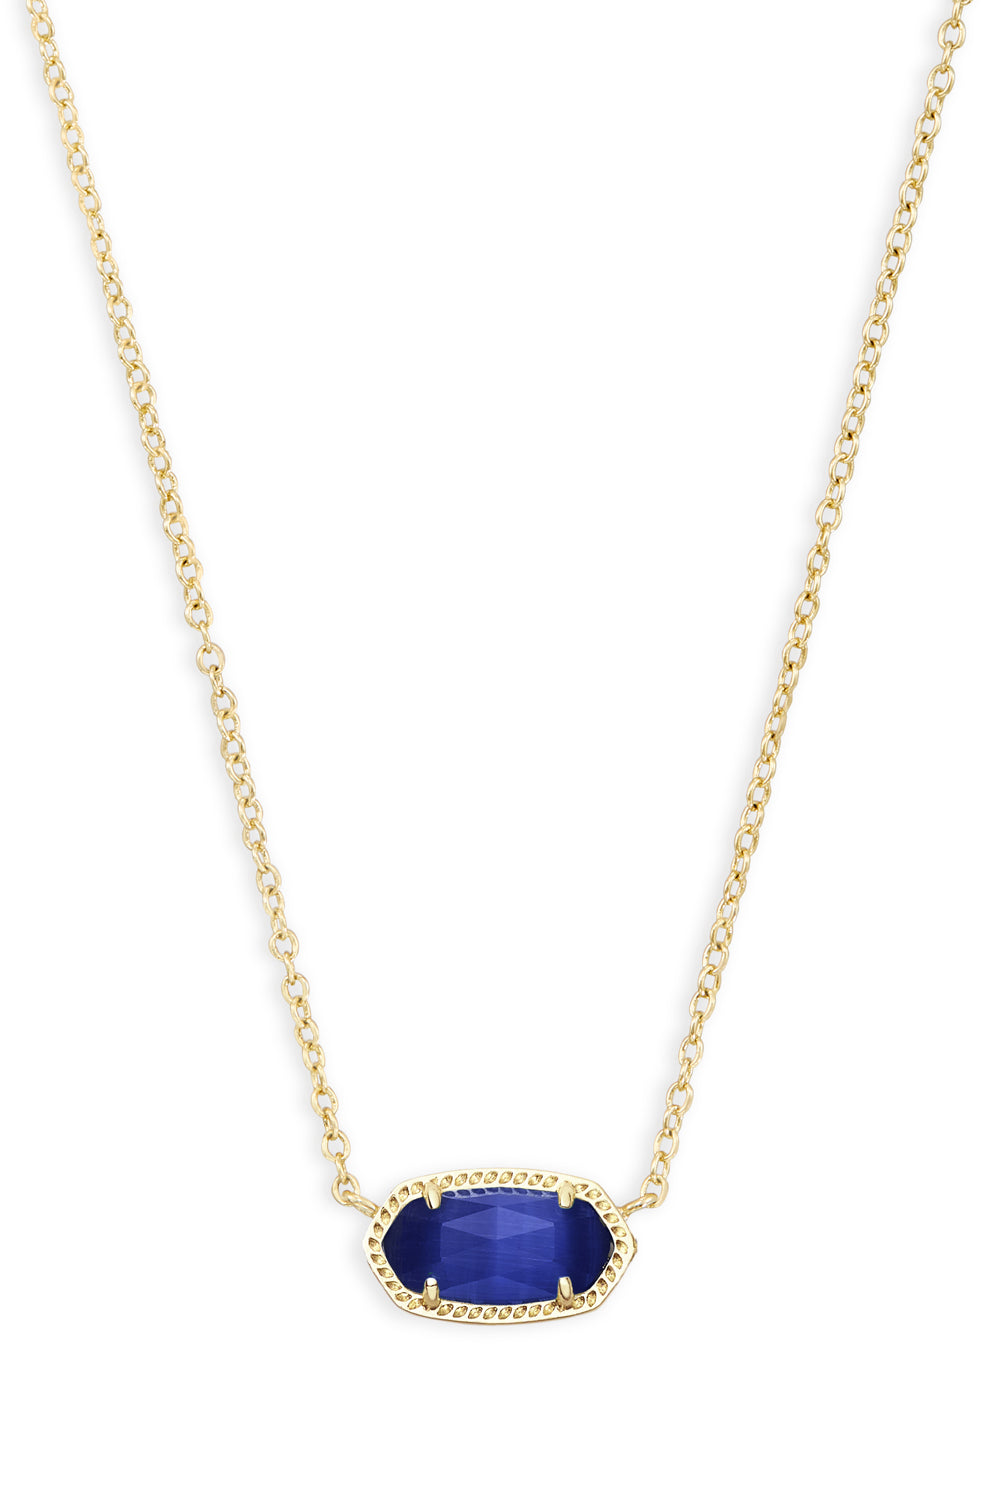 Kendra Scott: Elisa Gold Short Pendant Necklace - Cobalt Cats Eye | Makk Fashions